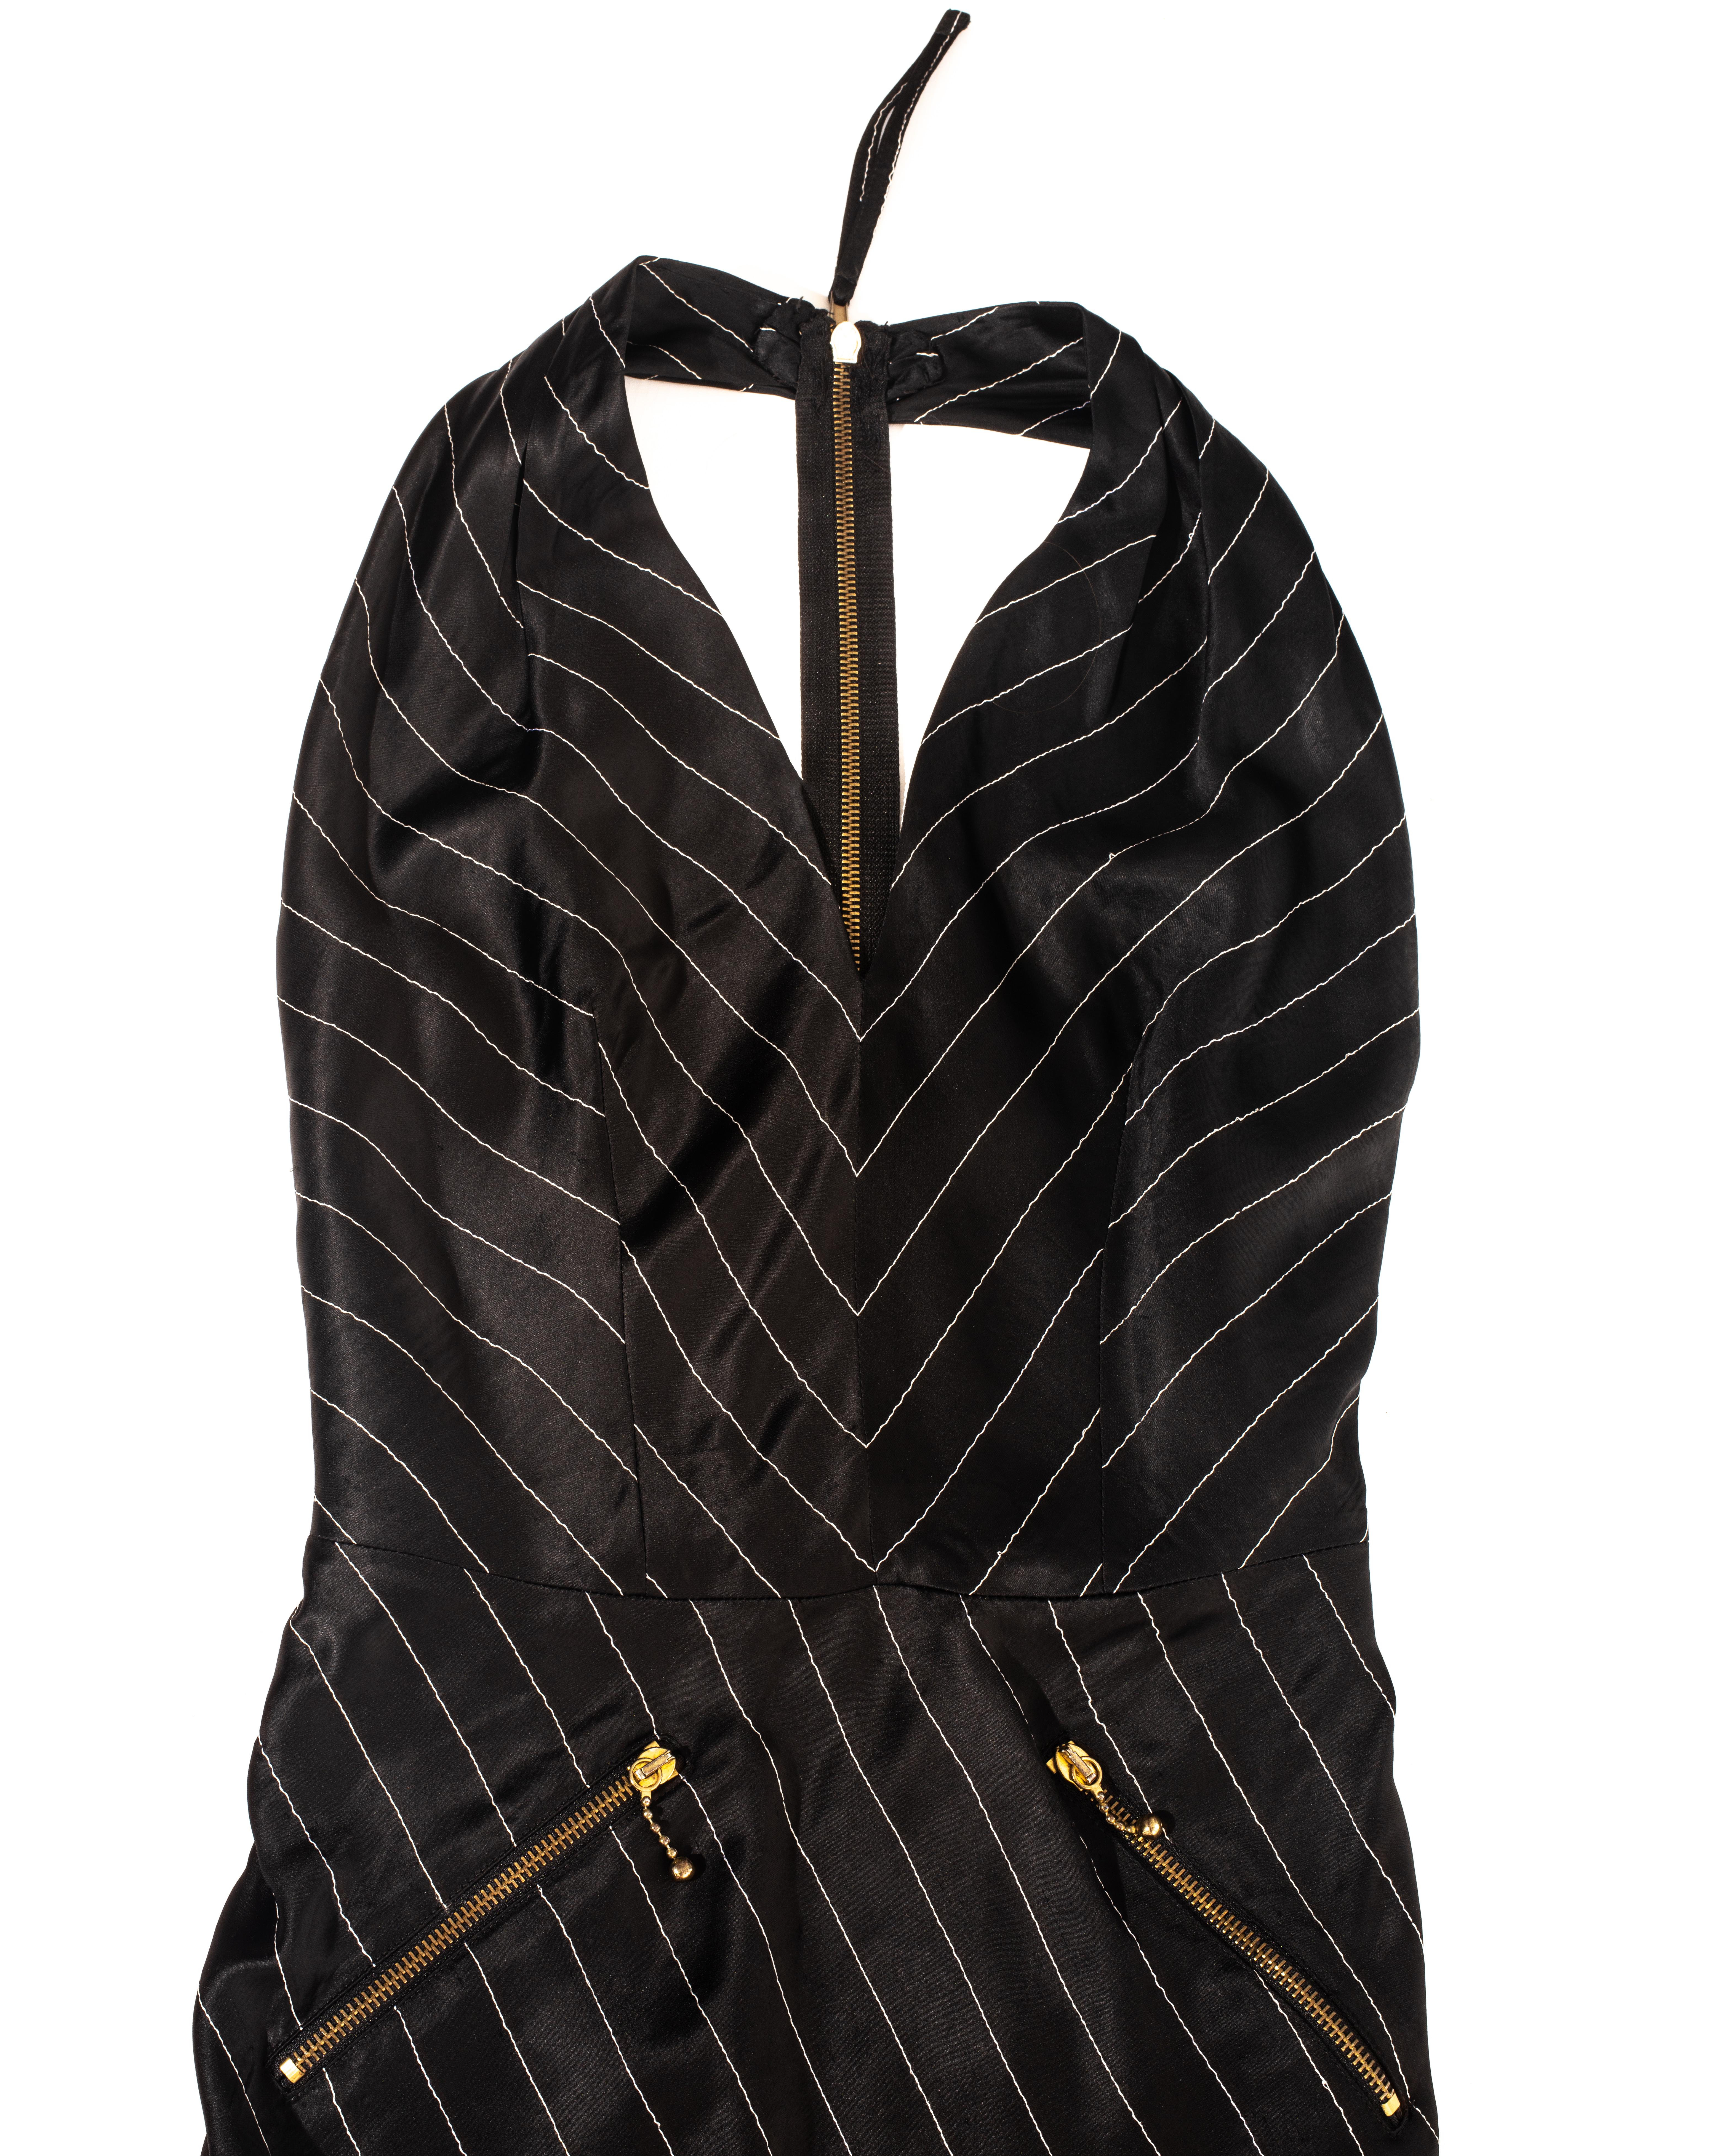 Black Jean Paul Gaultier black acetate striped zip-up evening dress, ss 1995 For Sale